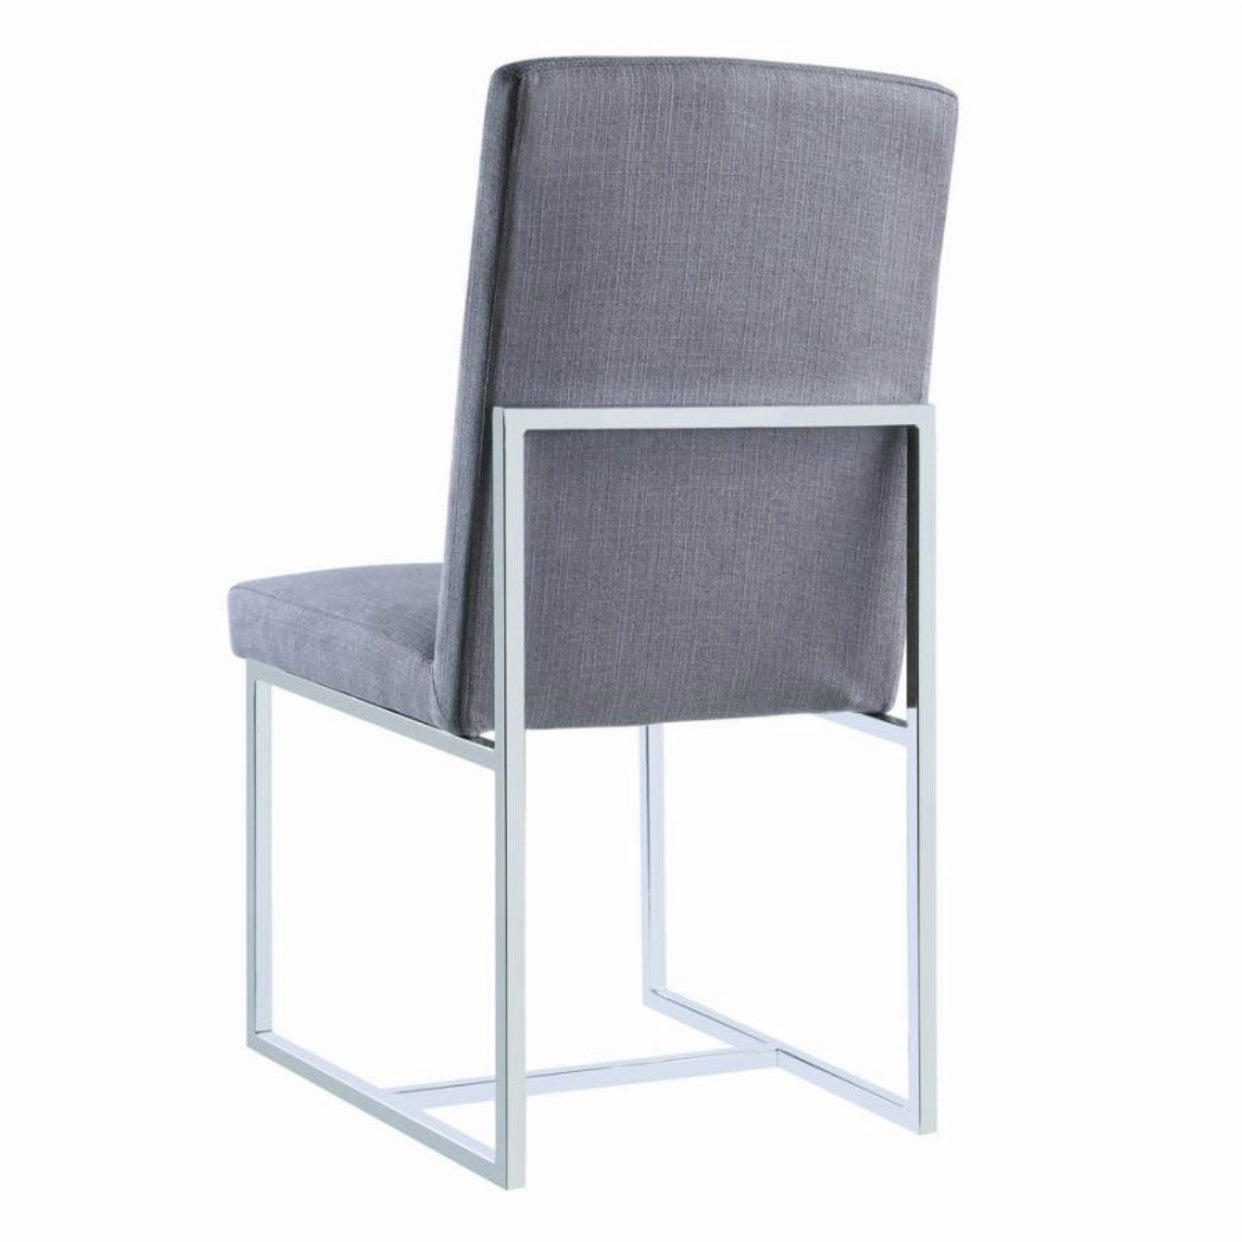 ANYKA Grey Upholstered Chair